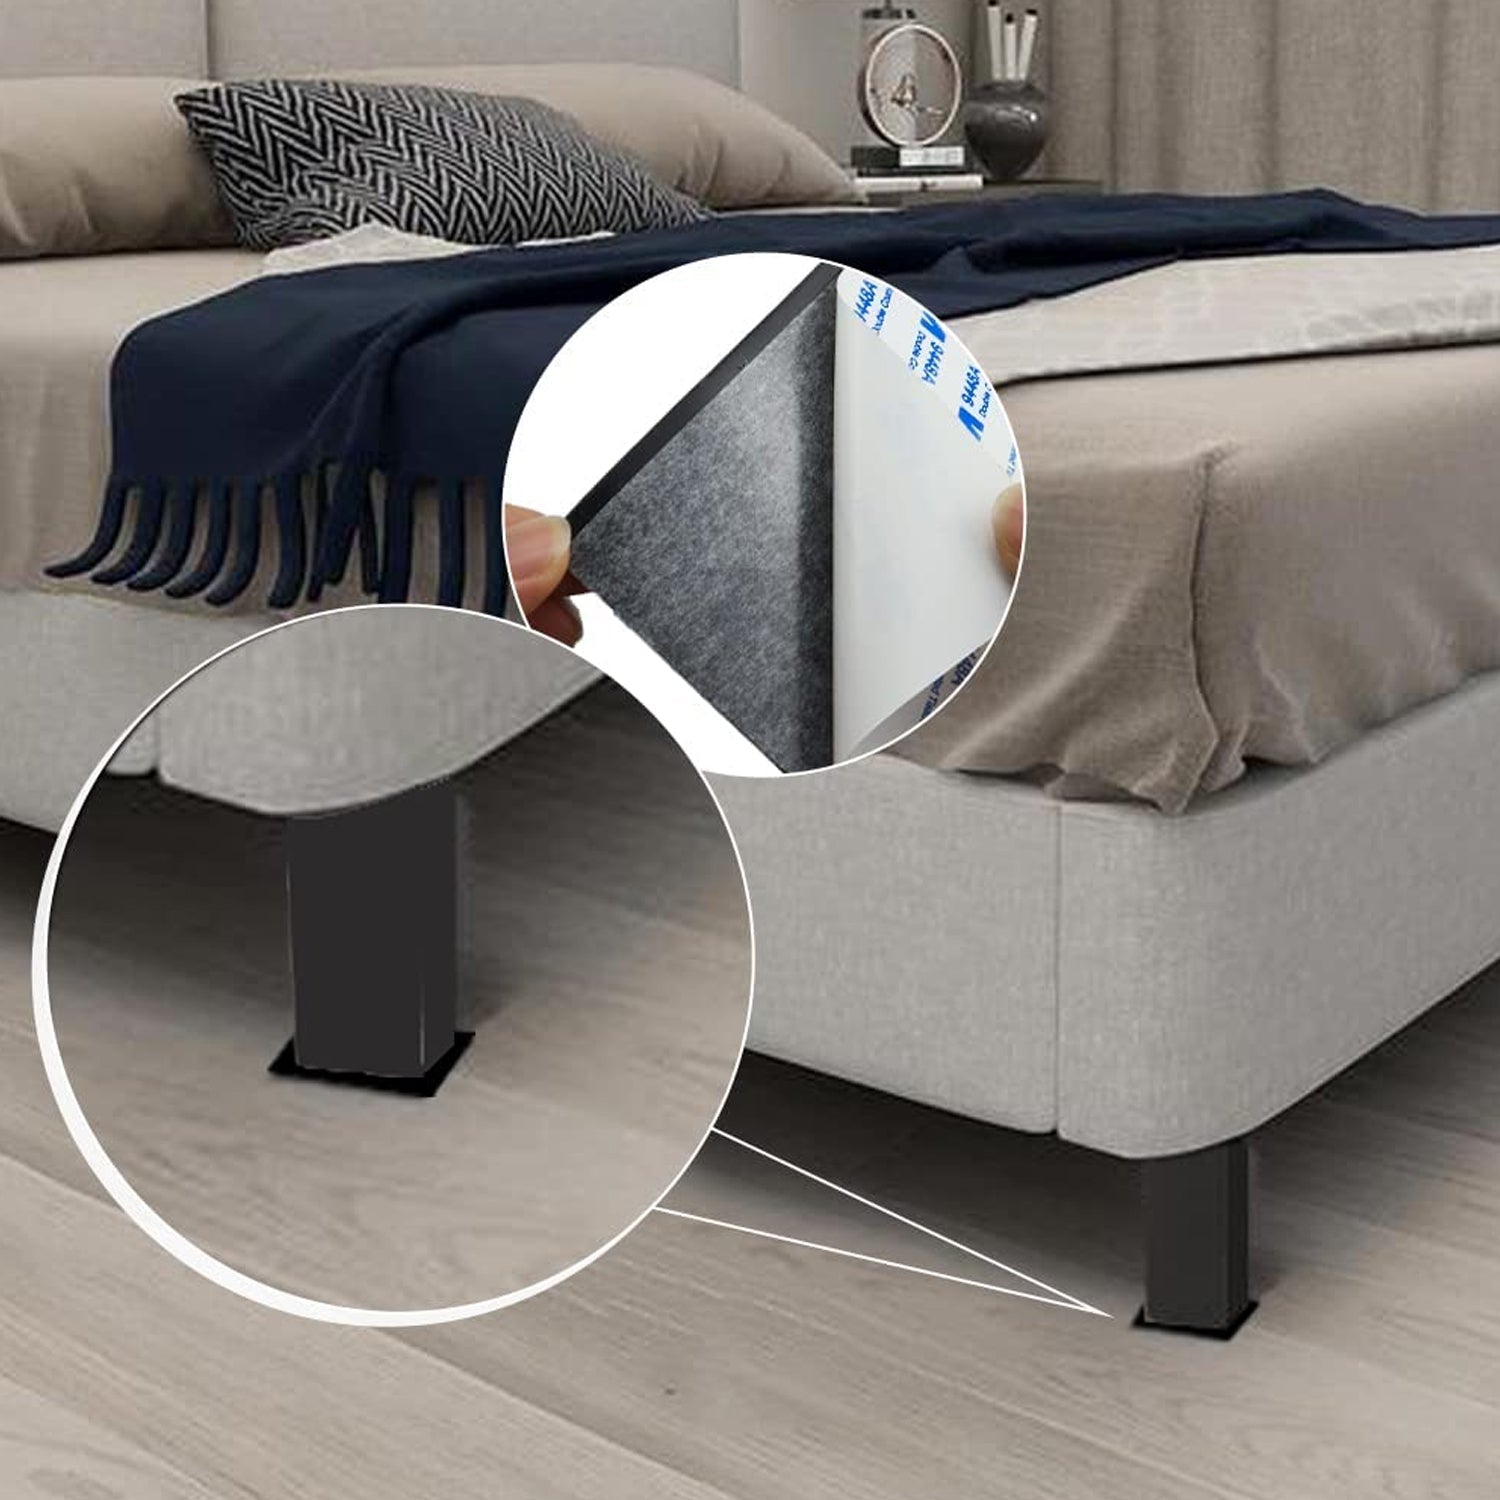 9077 Non Slip Furniture Pads Best Self Adhesive Rubber Feet Furniture Feet Pad Ideal Non Skid Furniture Pad Floor Protectors 